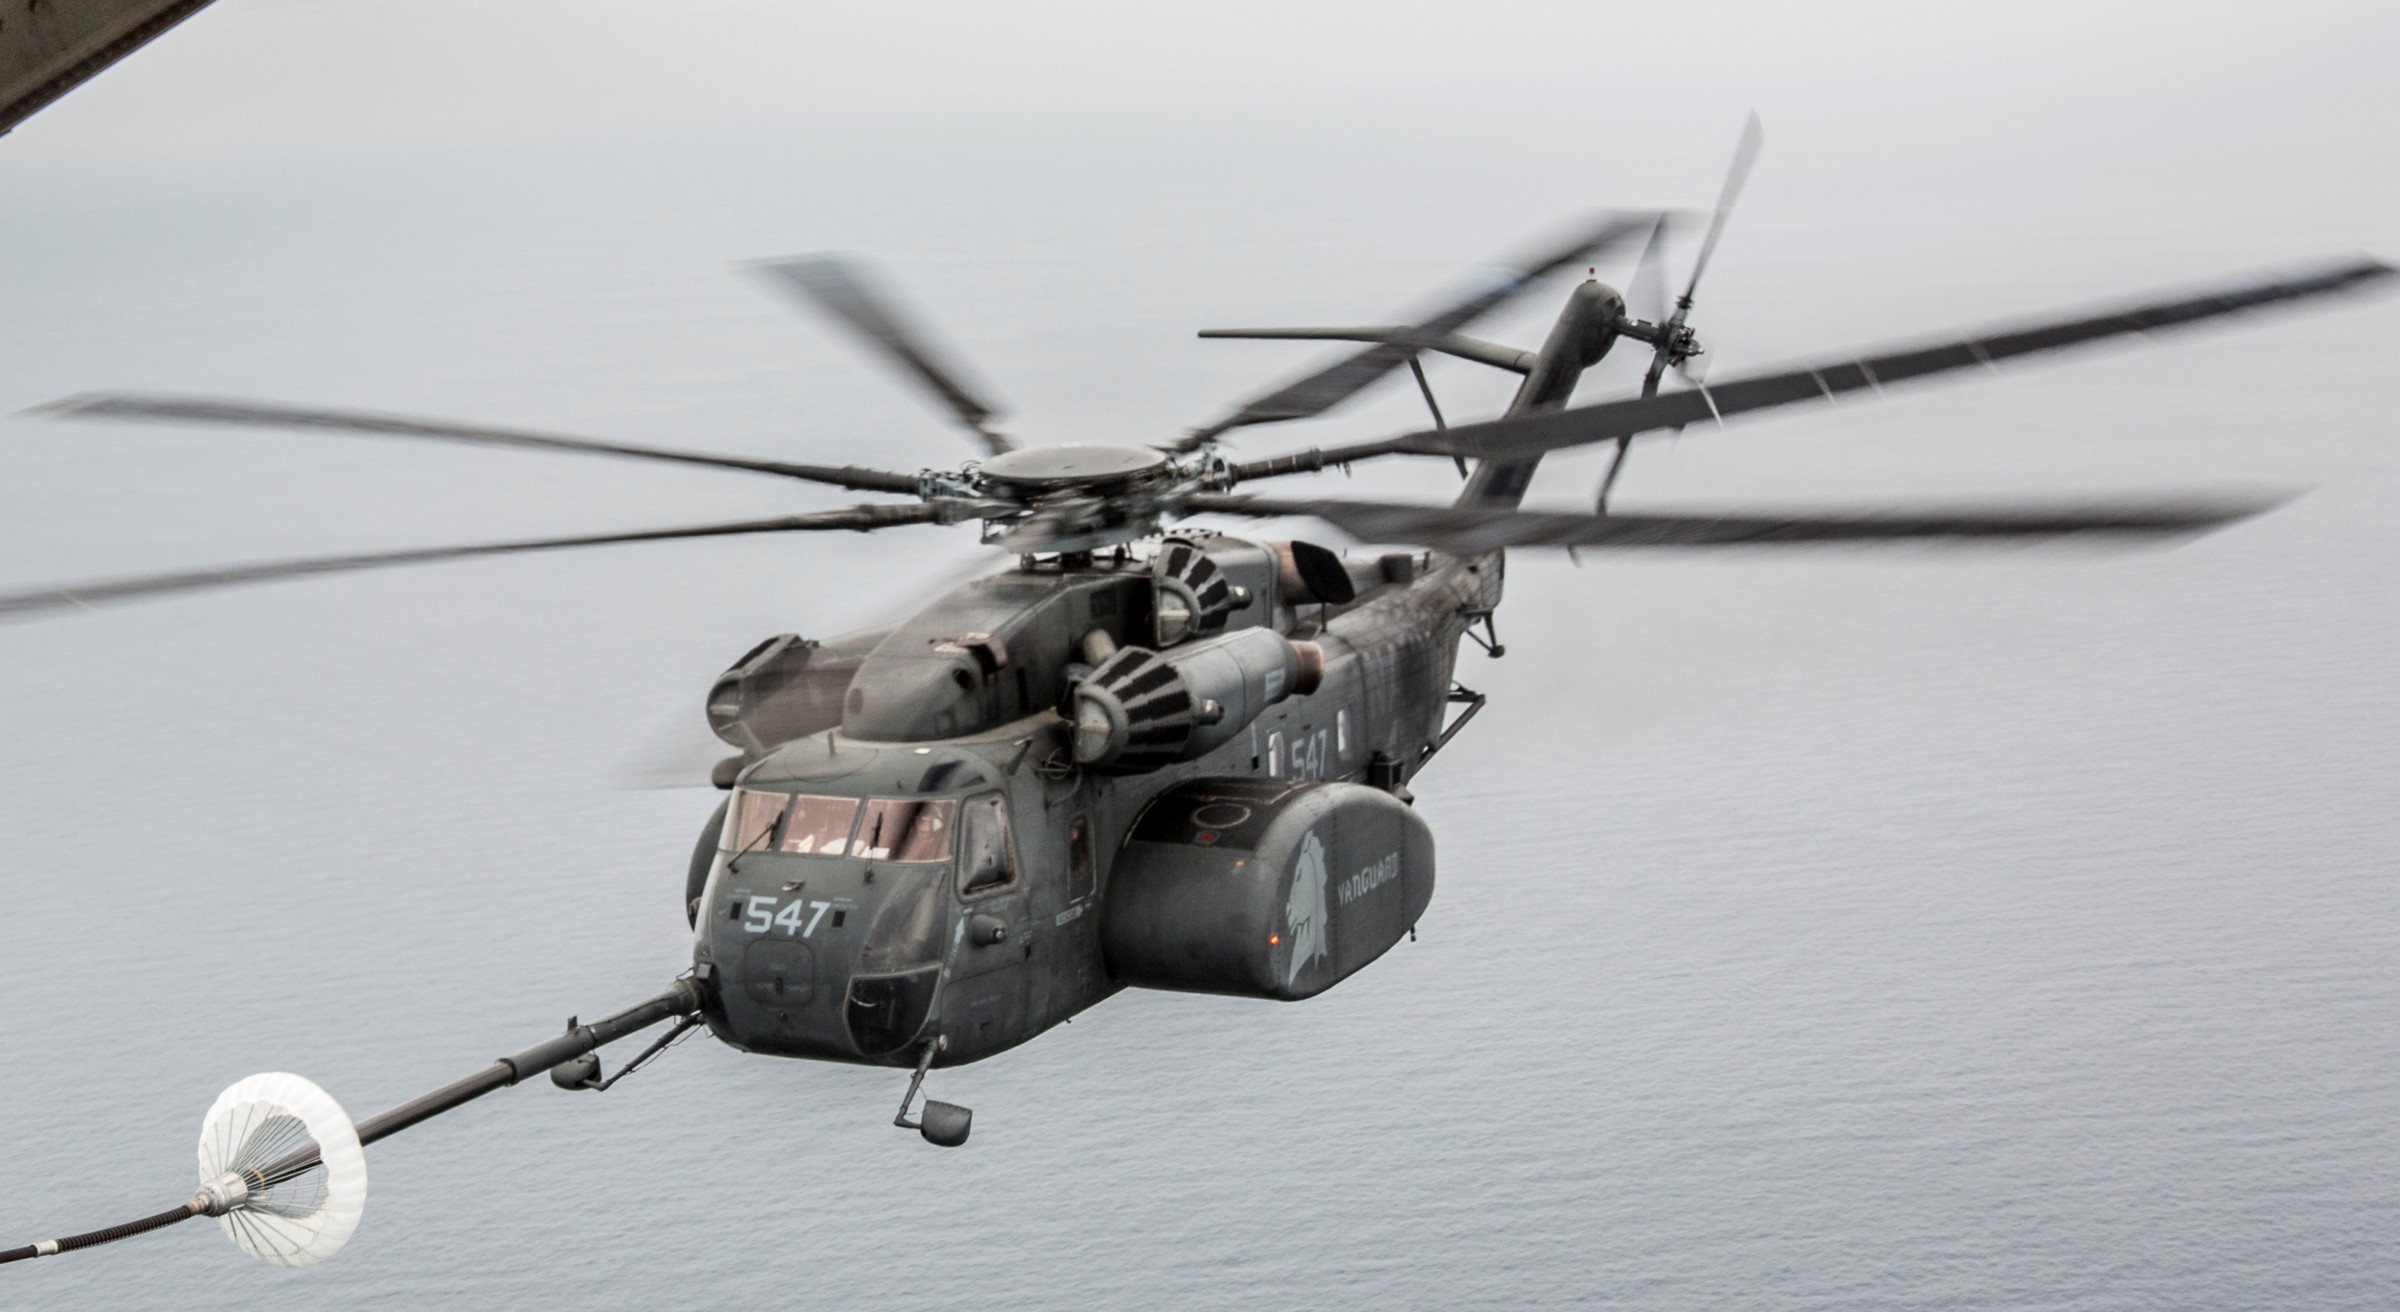 hm-14 vanguard helicopter mine countermeasures squadron navy mh-53e sea dragon 12 aerial refueling kc-130 hercules